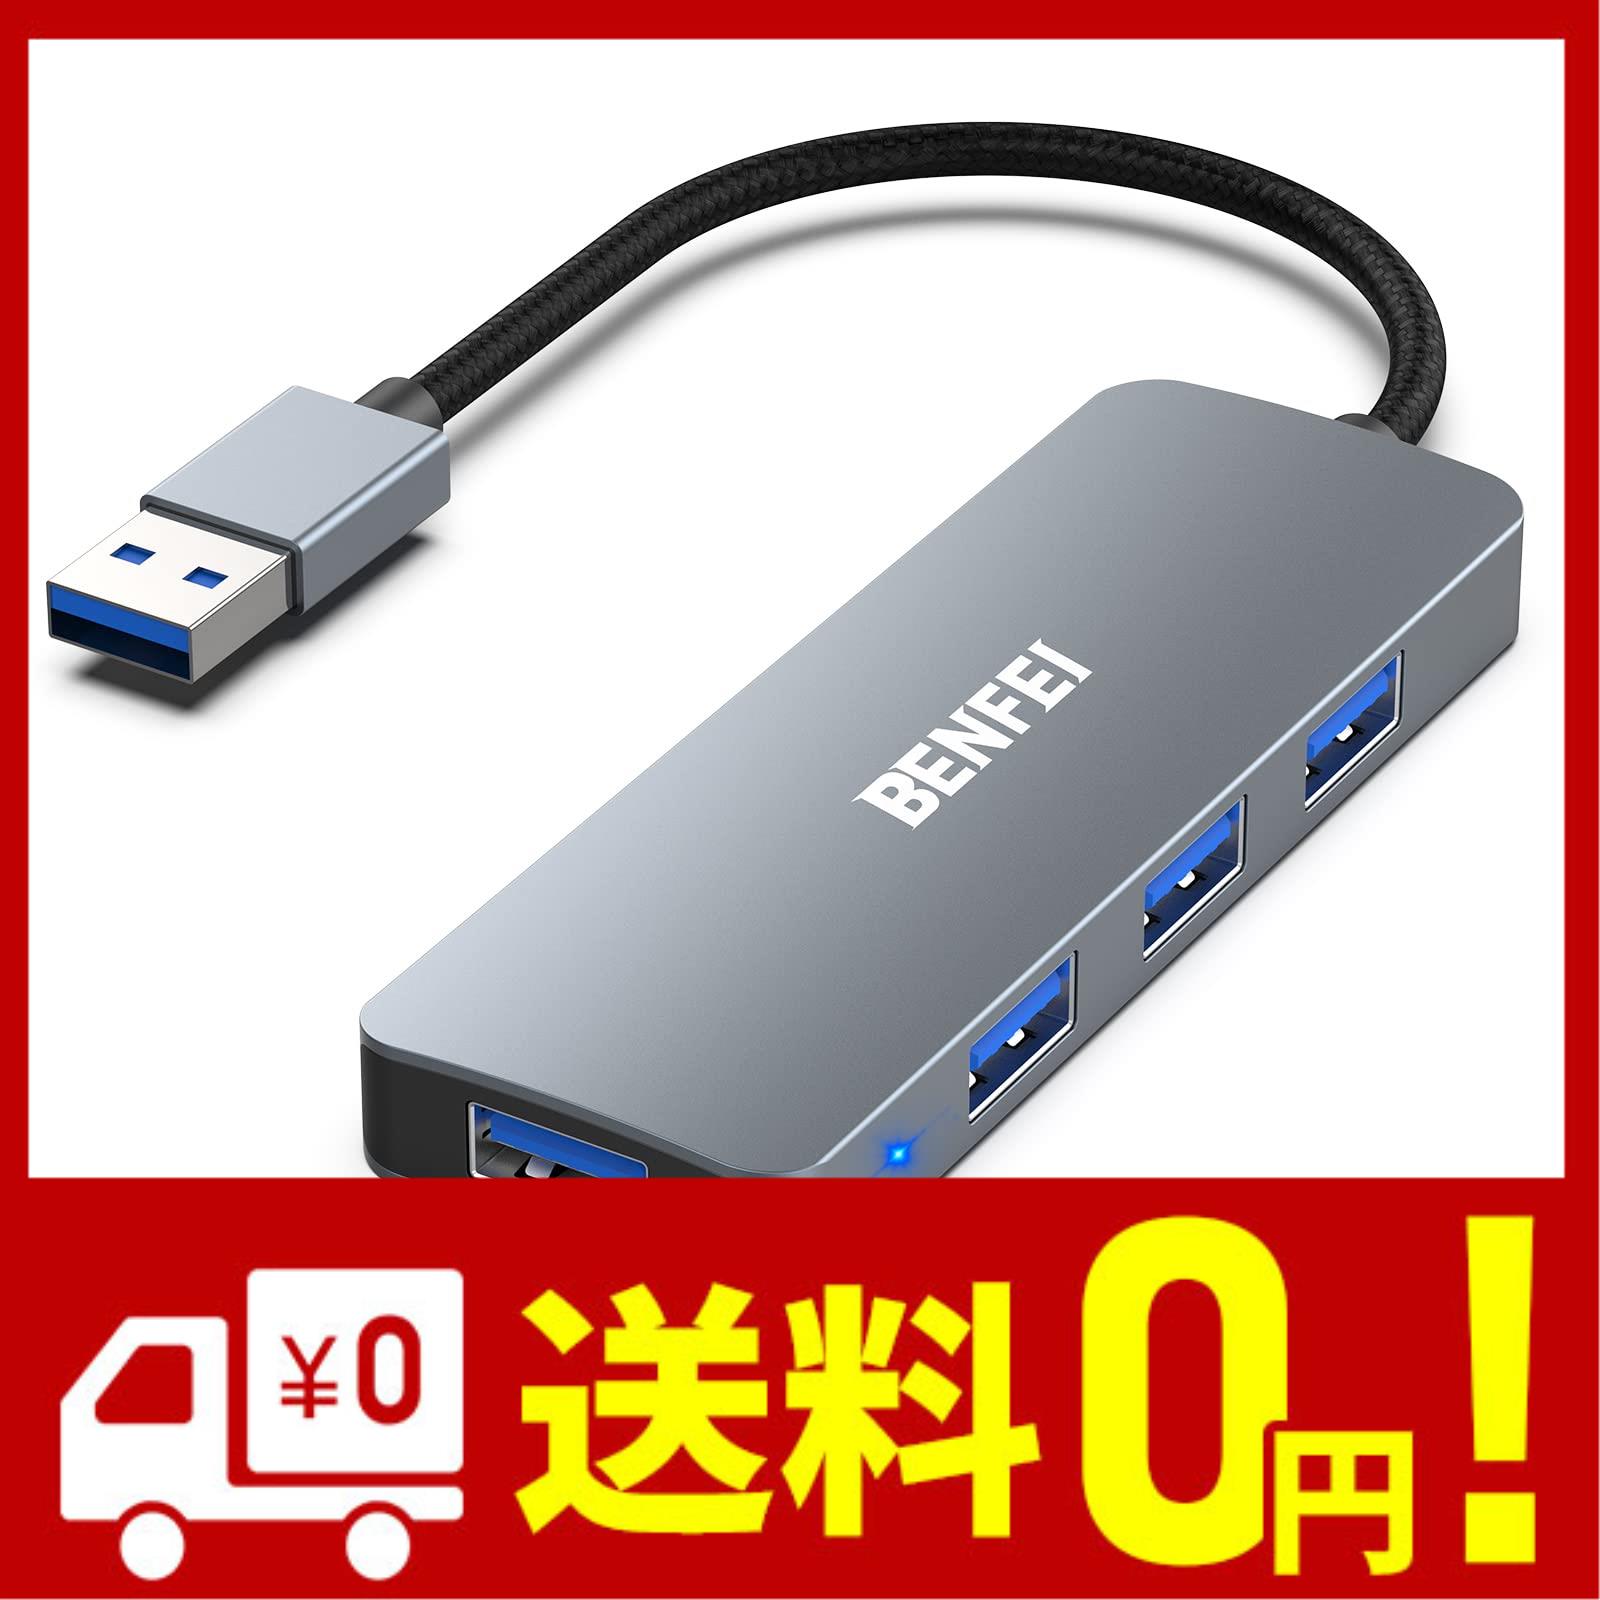 BENFEI USB 3.0 ハブ 4ポート 超薄型 USB 3.0 ハブ MacBook Mac Pro Mac Mini iMac Surface Pro XPS PC フラッシュドライブ モバイルHDD